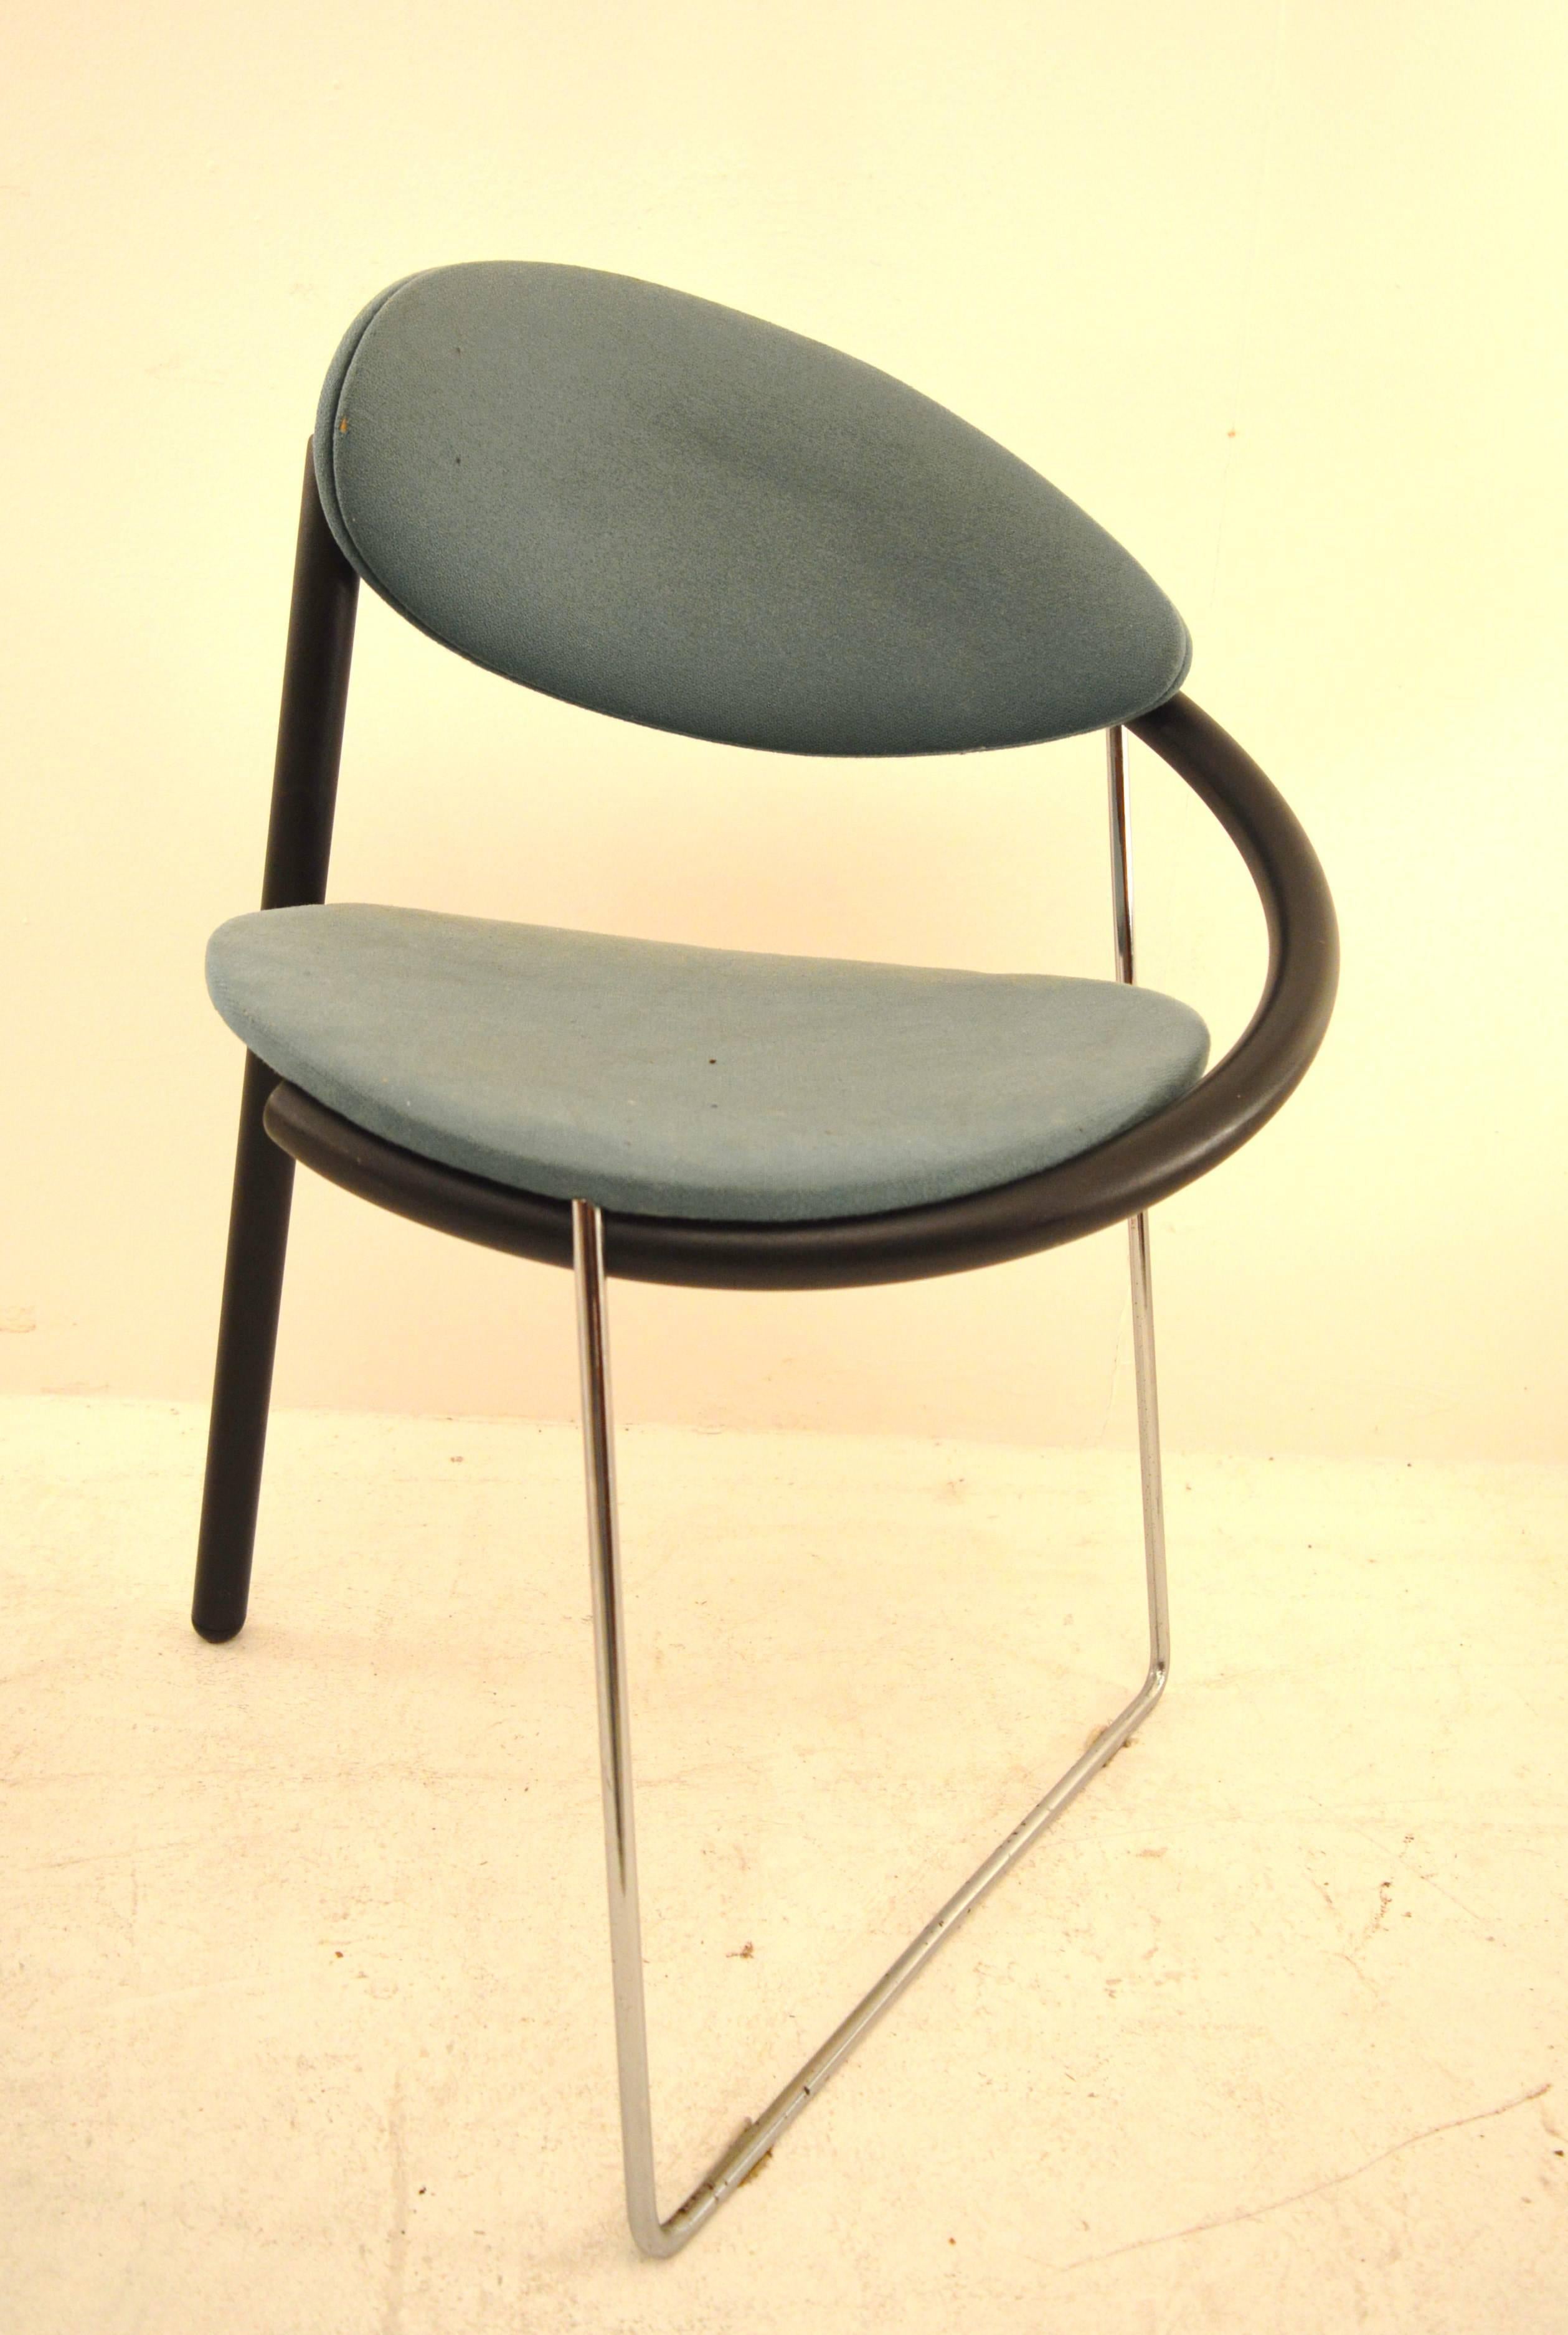 Late 20th Century Memphis Style Chairs by Boonzaaijer Mazairac, 1986